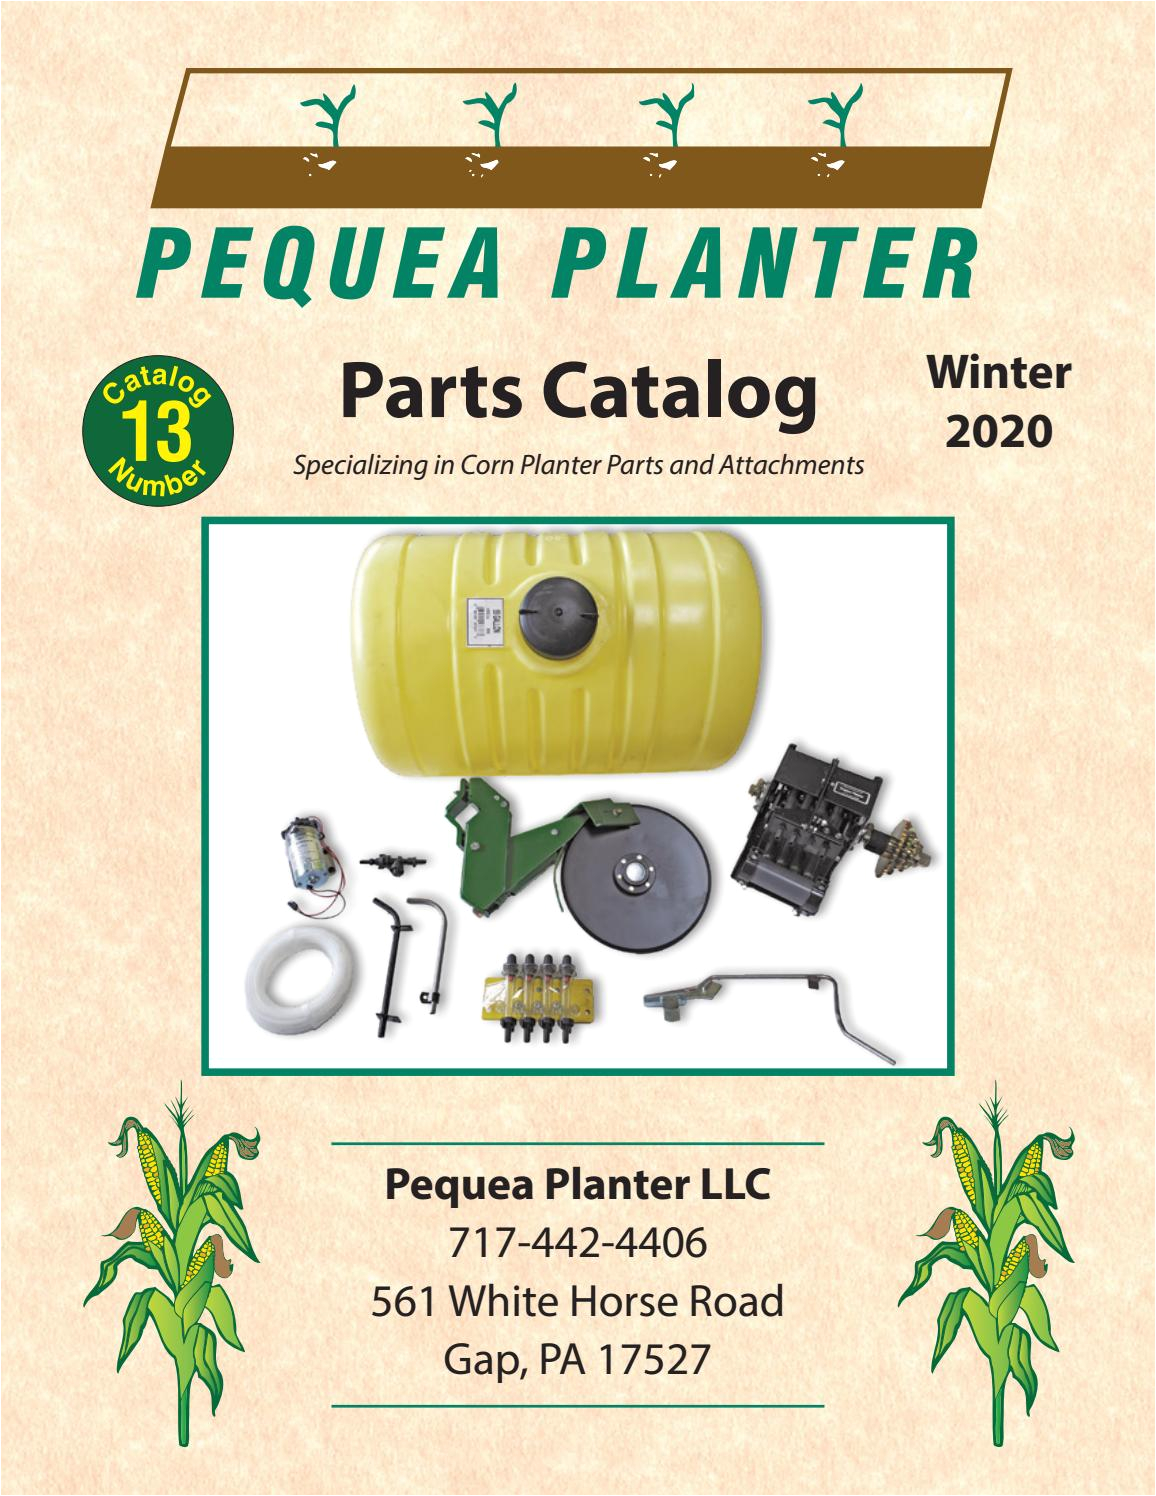 John Deere 7200 Planter Wiring Diagram Pequea Planter Parts Catalog by Big Picture Studio issuu